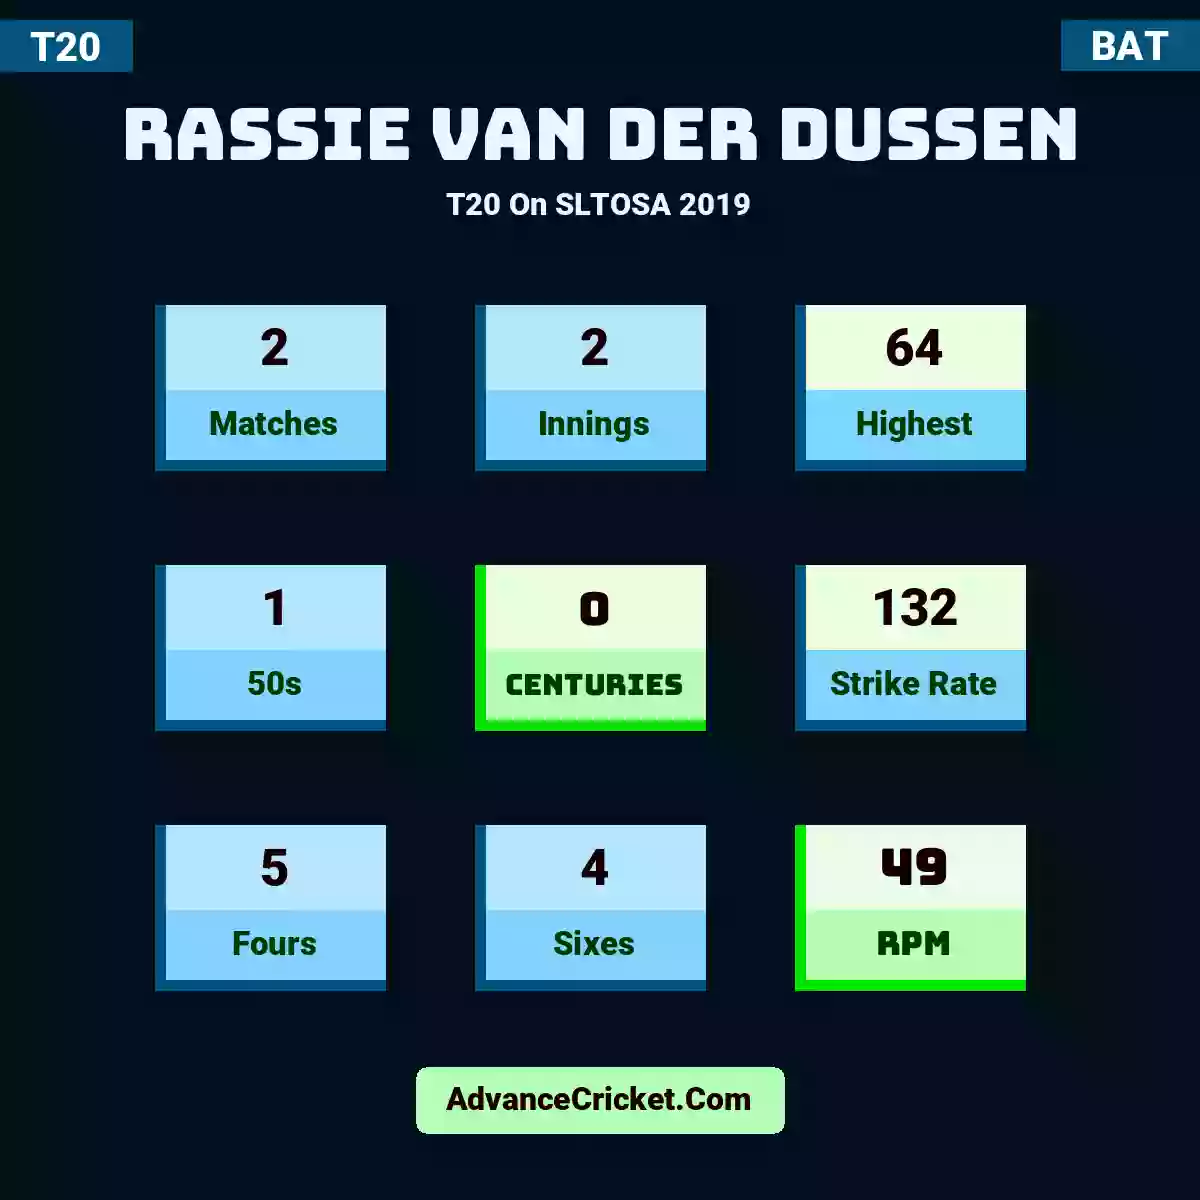 Rassie van der Dussen T20  On SLTOSA 2019, Rassie van der Dussen played 2 matches, scored 64 runs as highest, 1 half-centuries, and 0 centuries, with a strike rate of 132. R.Dussen hit 5 fours and 4 sixes, with an RPM of 49.